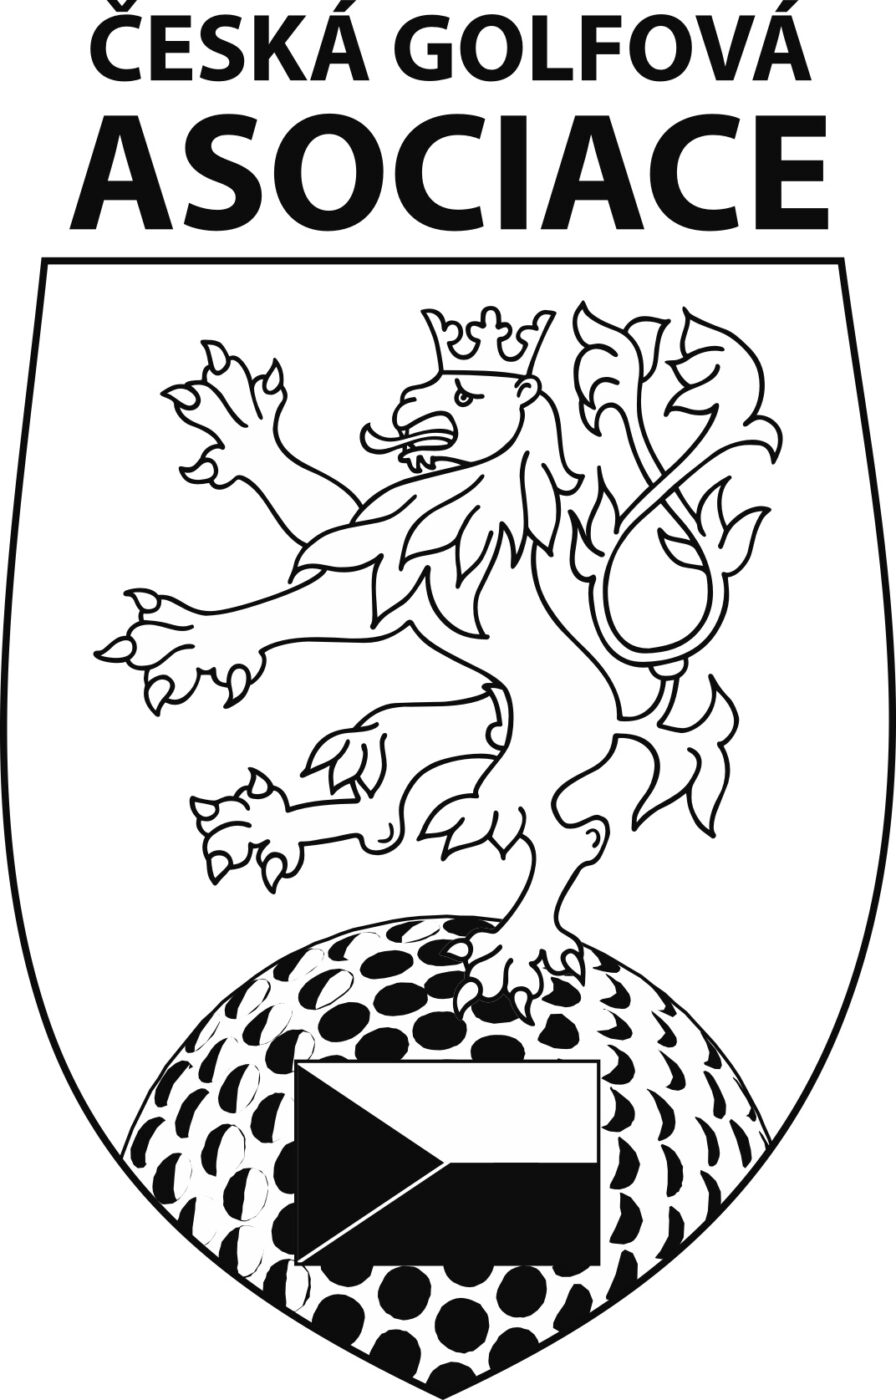 CESKA-GOLFOVA-ASOCIACE-logo-BW